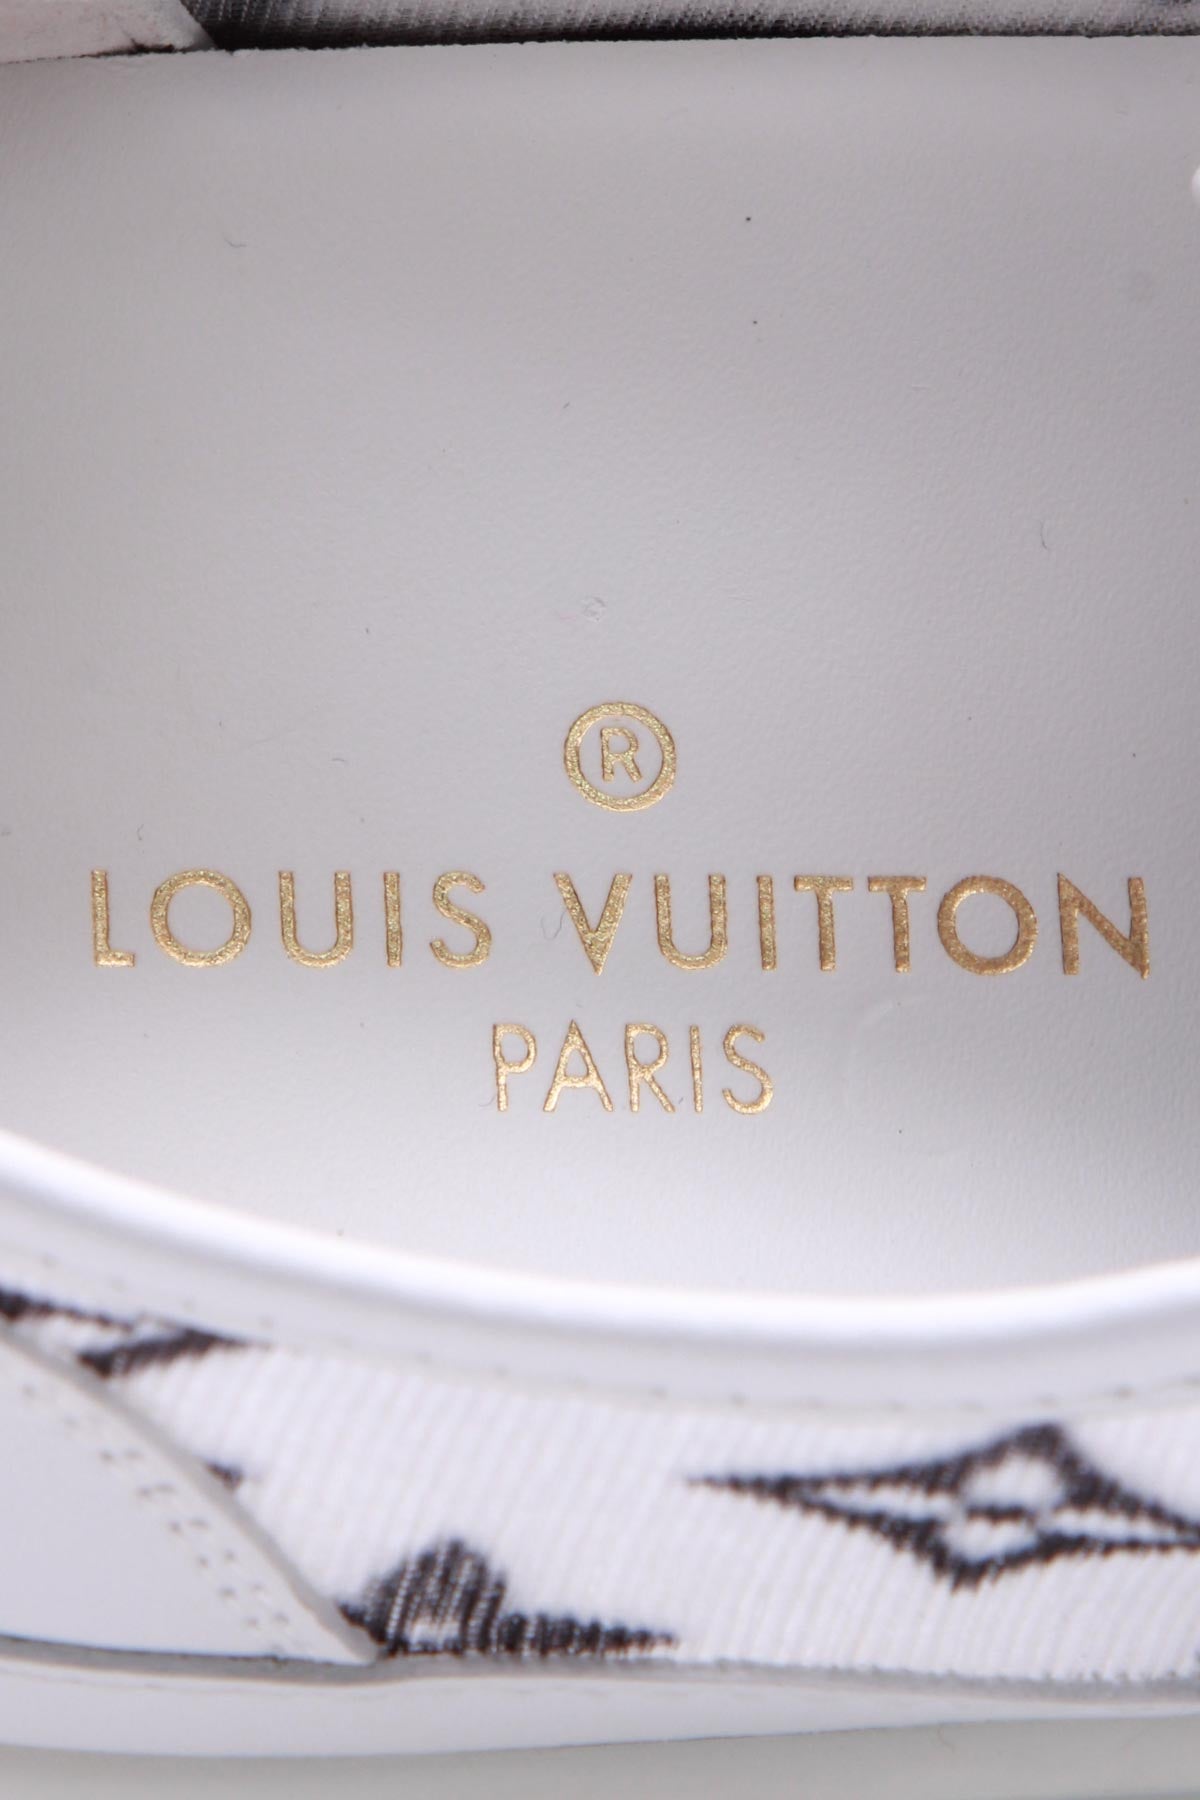 Louis Vuitton Stellar Mesh Sneakers - US Size 11 - Couture USA